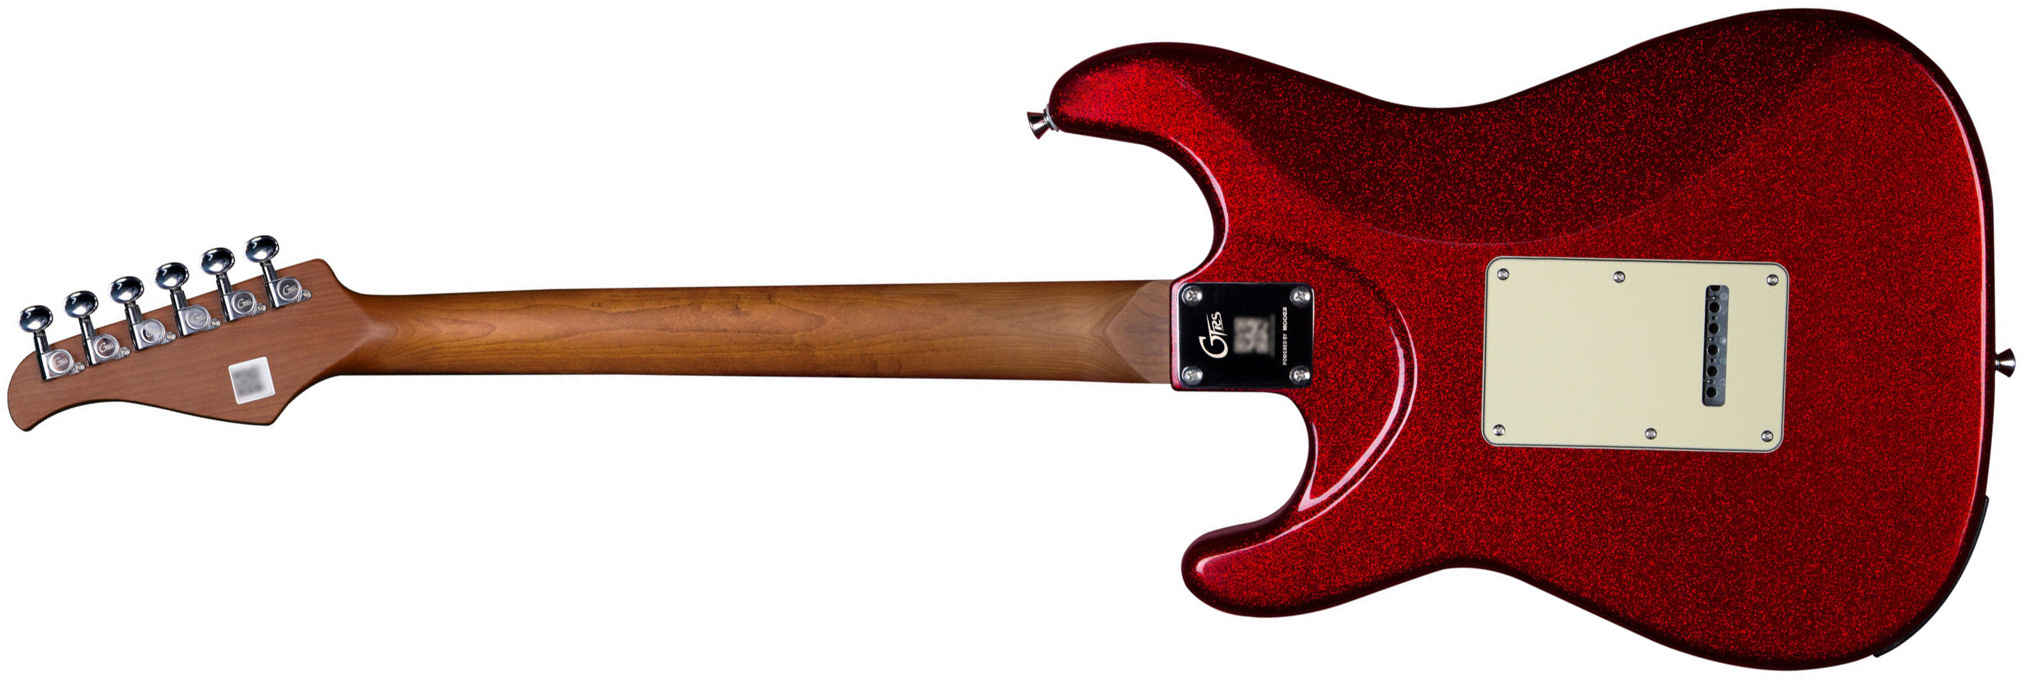 Mooer Gtrs S800 Hss Trem Rw - Metal Red - MIDI / Digital elektrische gitaar - Variation 1